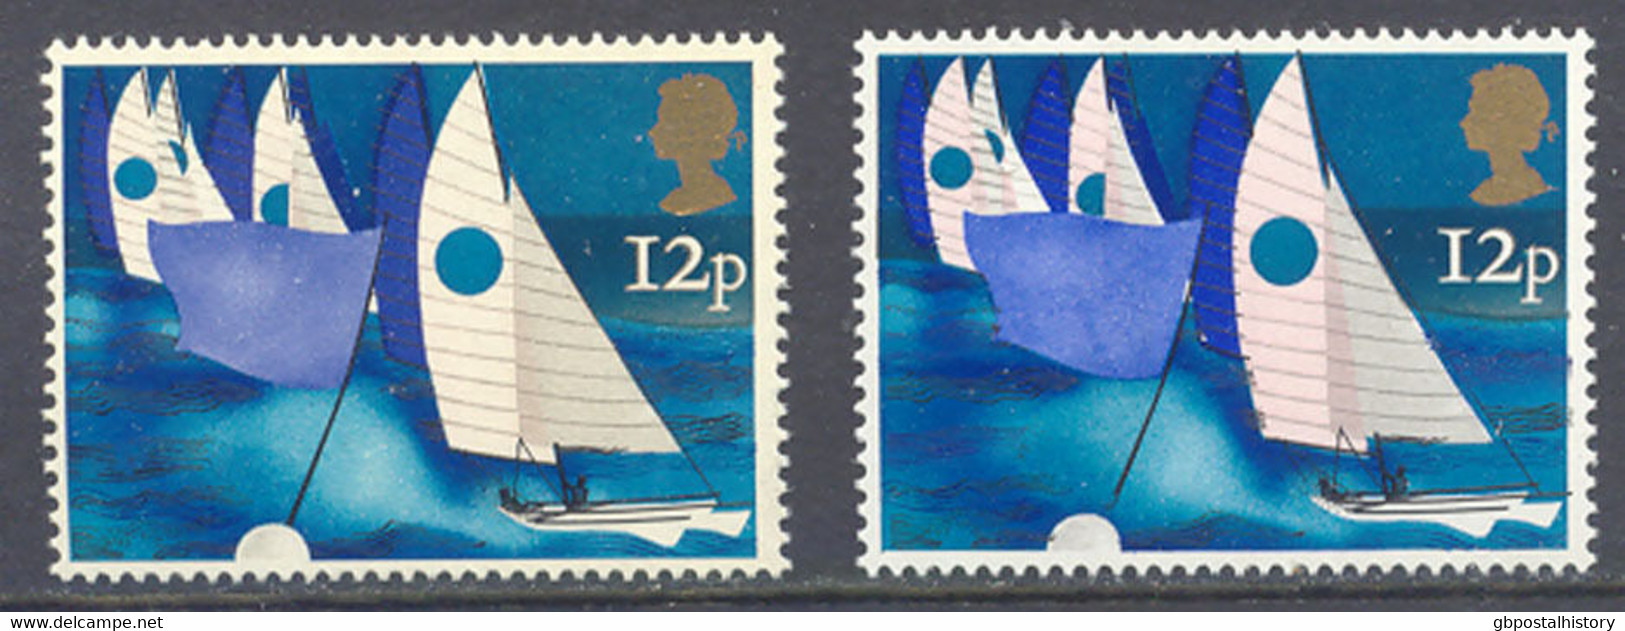 GB 1975 Sailing 12 P U/M ERROR/VARIETY: ROSE COLOUR + PHOSPHOR MISSING - Variedades, Errores & Curiosidades